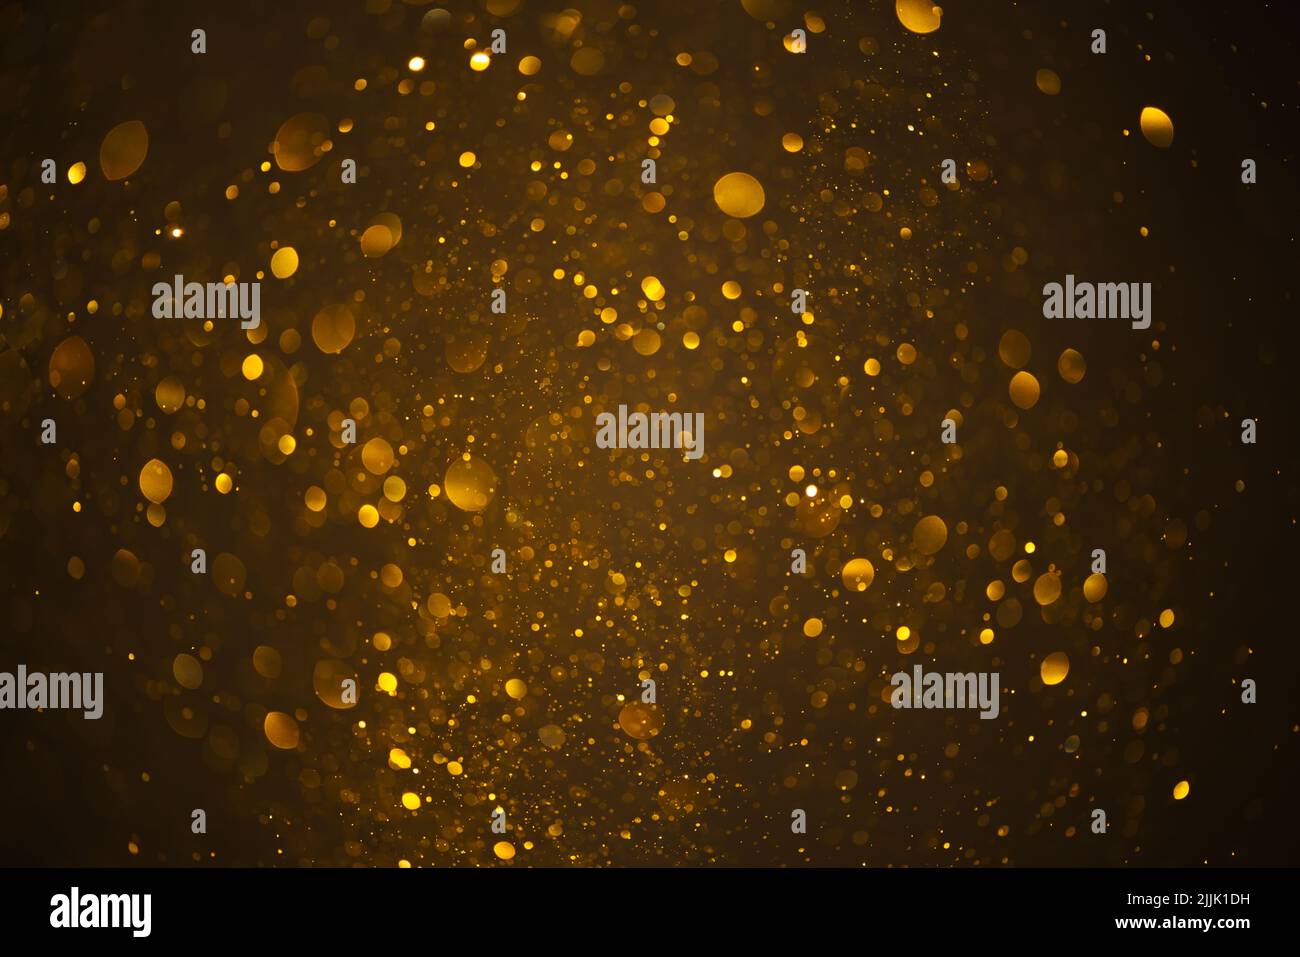 Glowing golden glitter festive lights abstract bokeh dark background Stock Photo